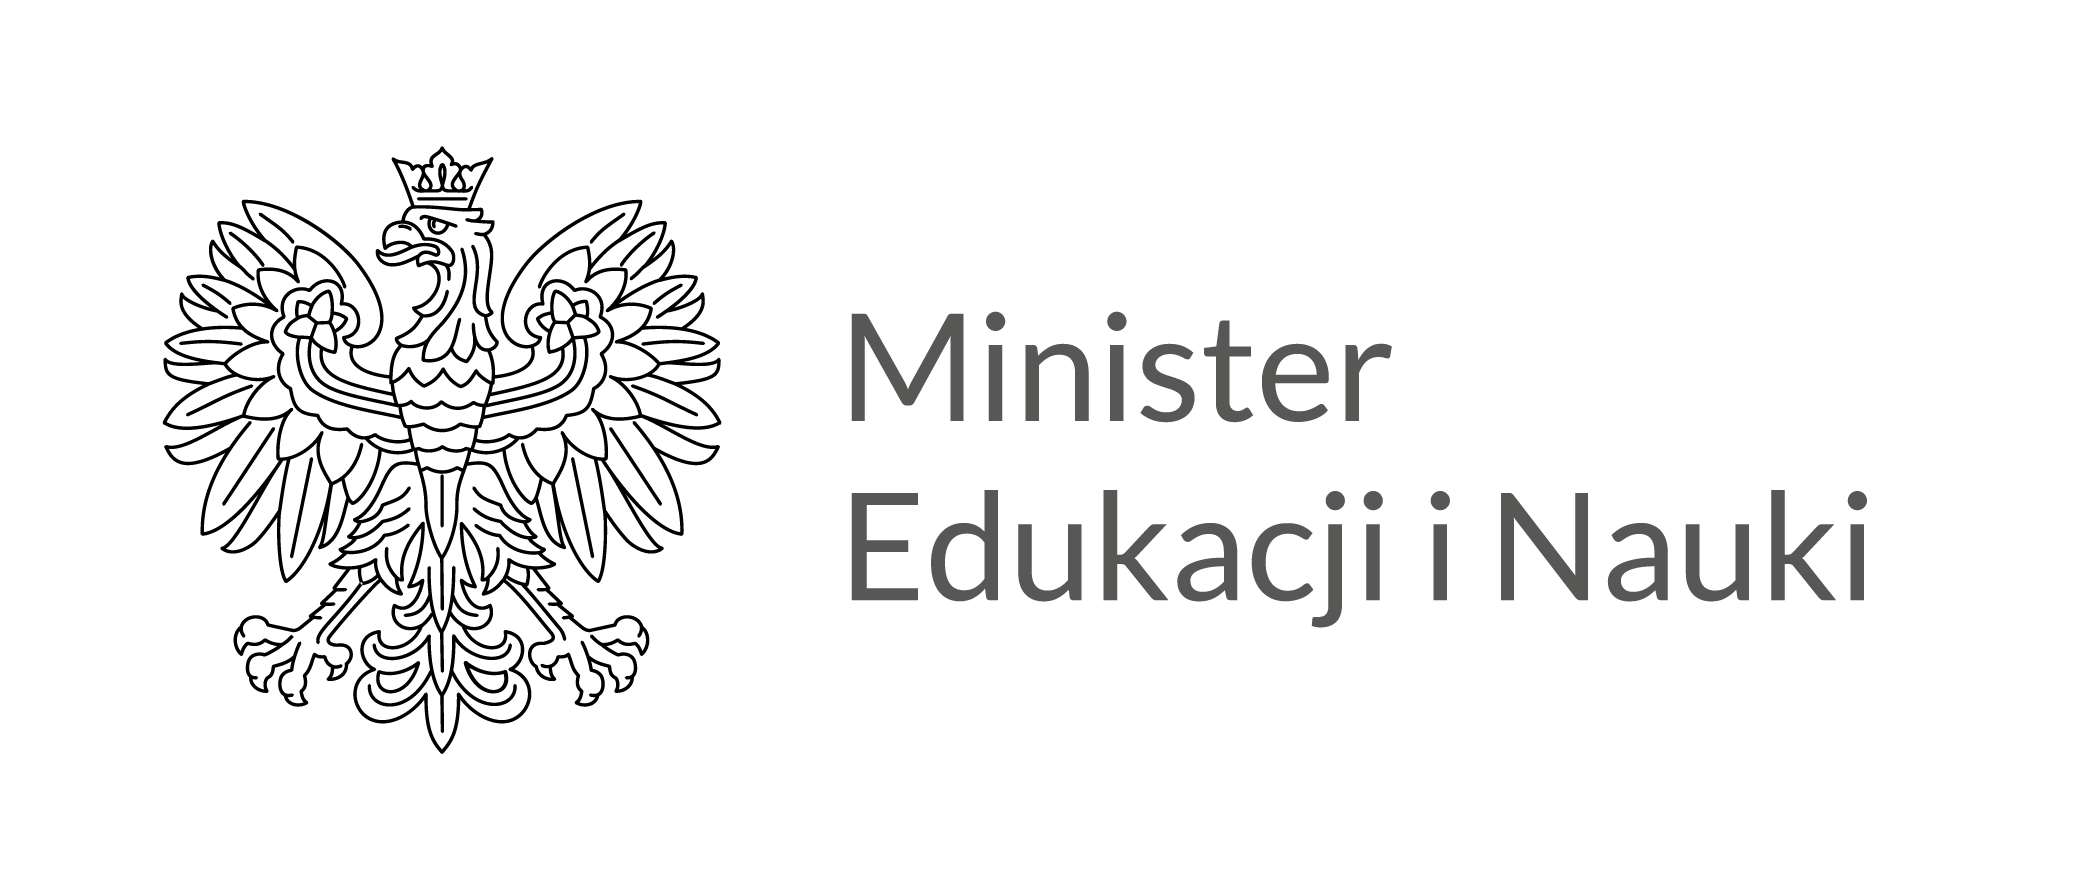 logo Minister Edukacji i Nauki